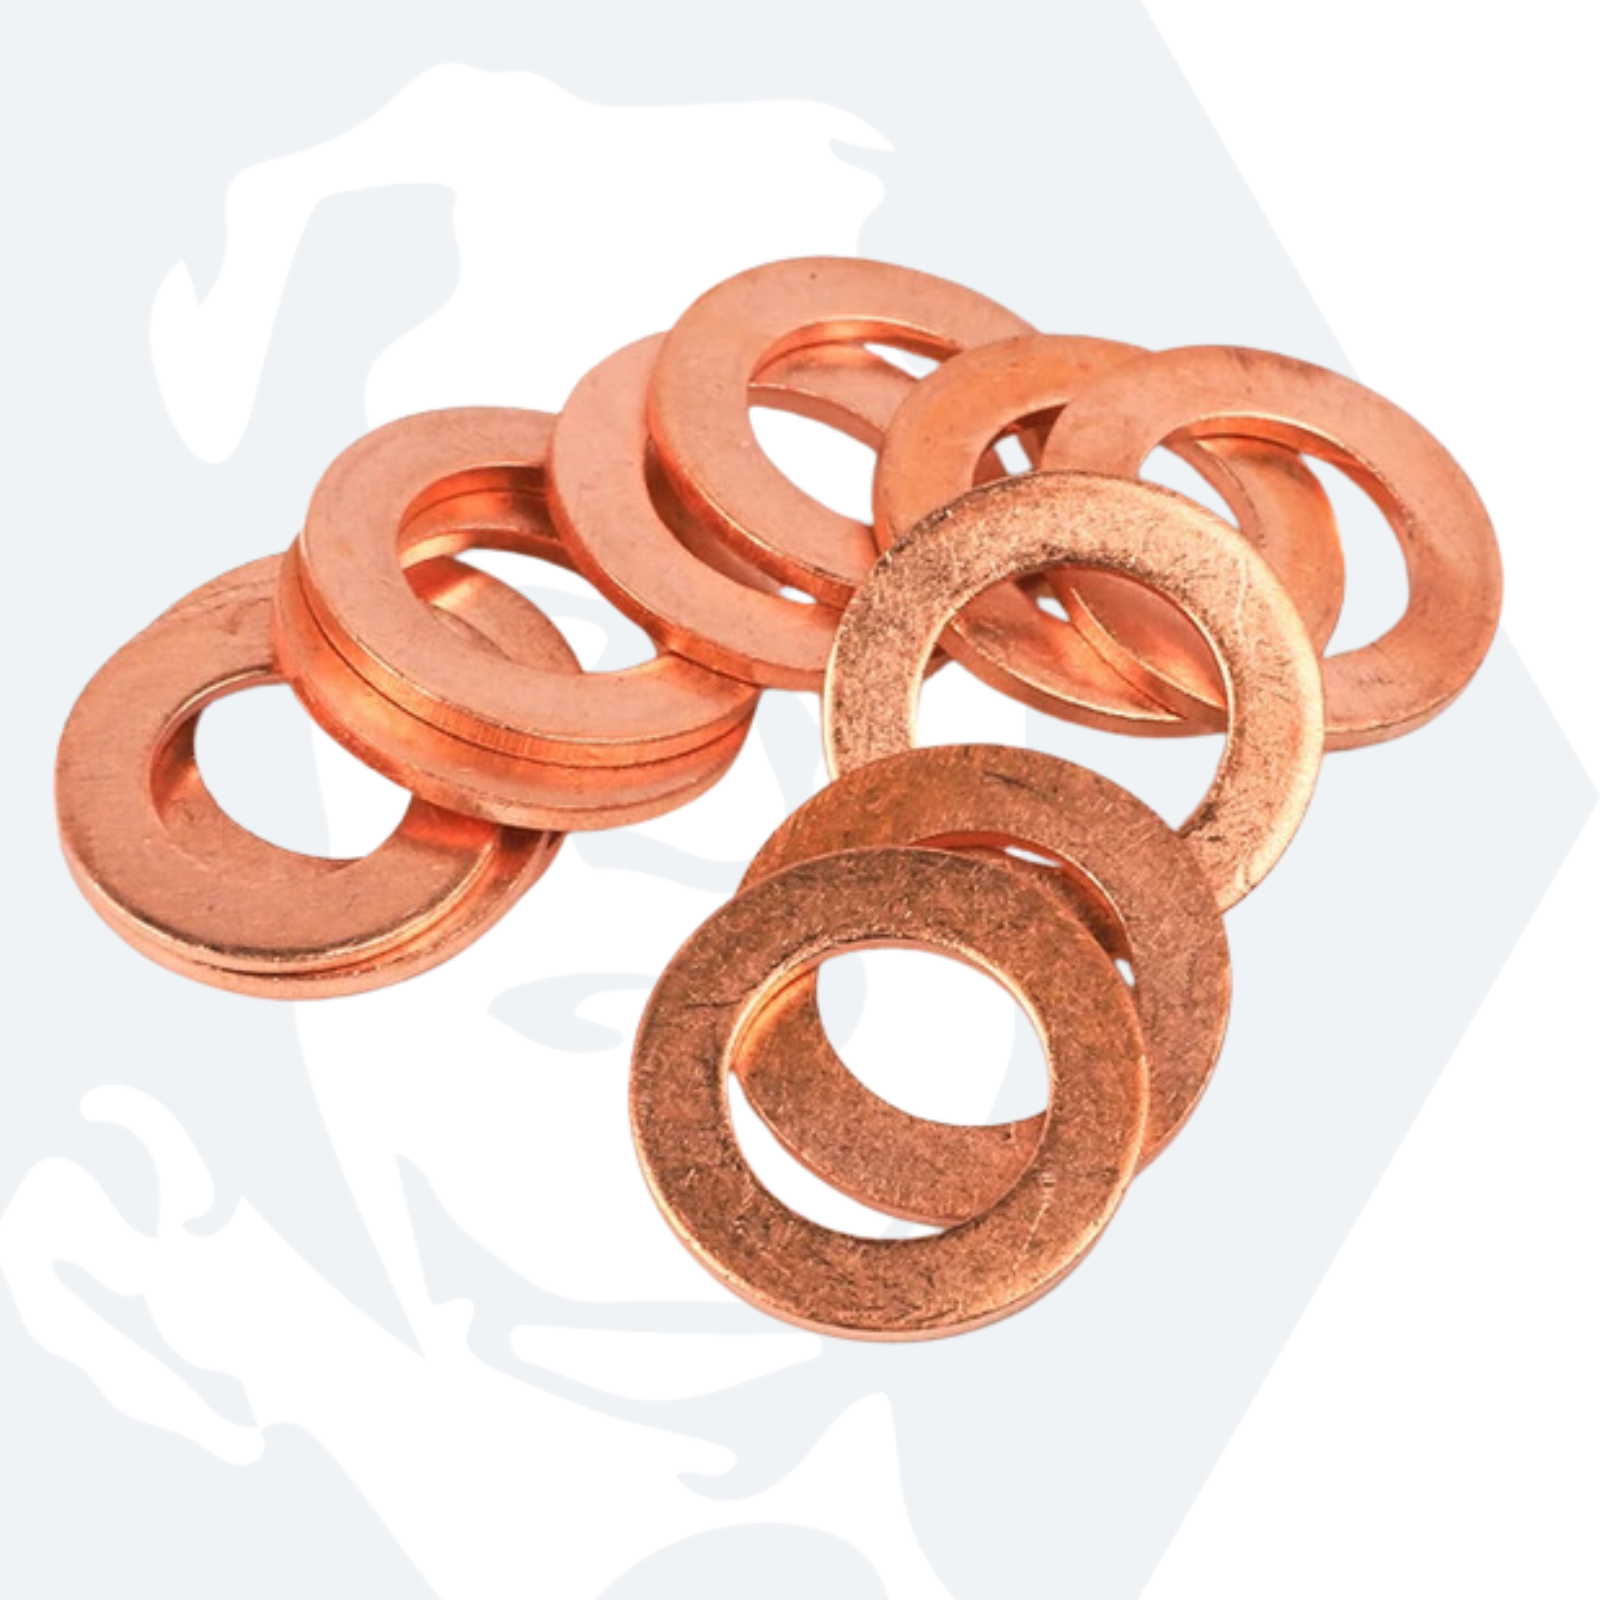 M8 x 12mm x 1mm Sealing Washers - Copper